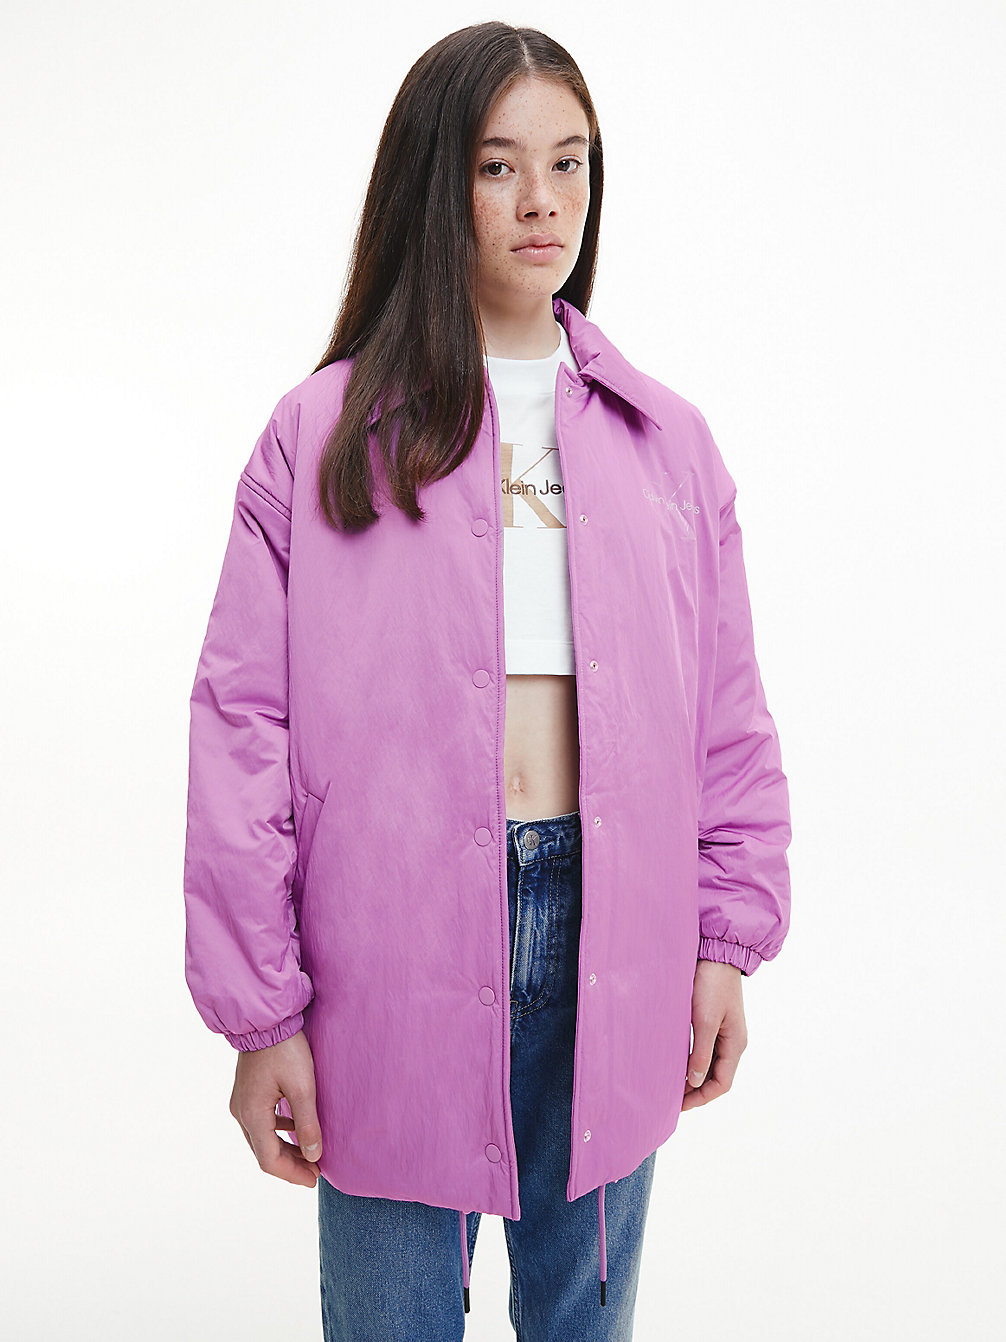 IRIS ORCHID > Габаритная куртка-рубашка с наполнителем > undefined Женщины - Calvin Klein